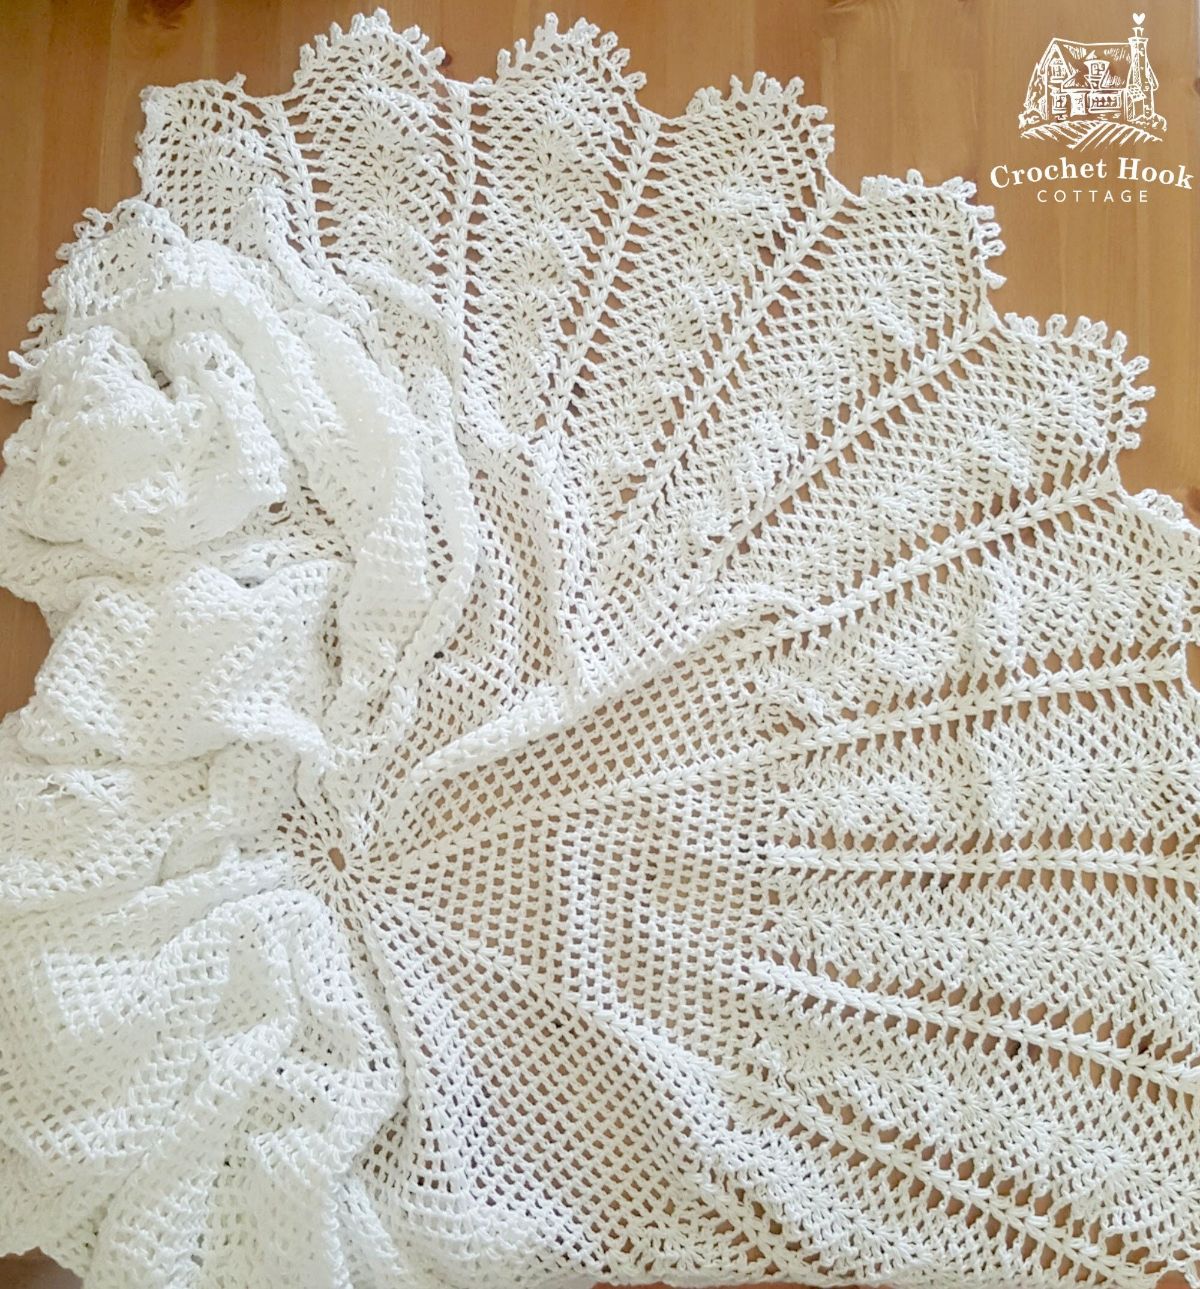 A white crochet baby shawl shaped like a fan spread out on a wooden floor.